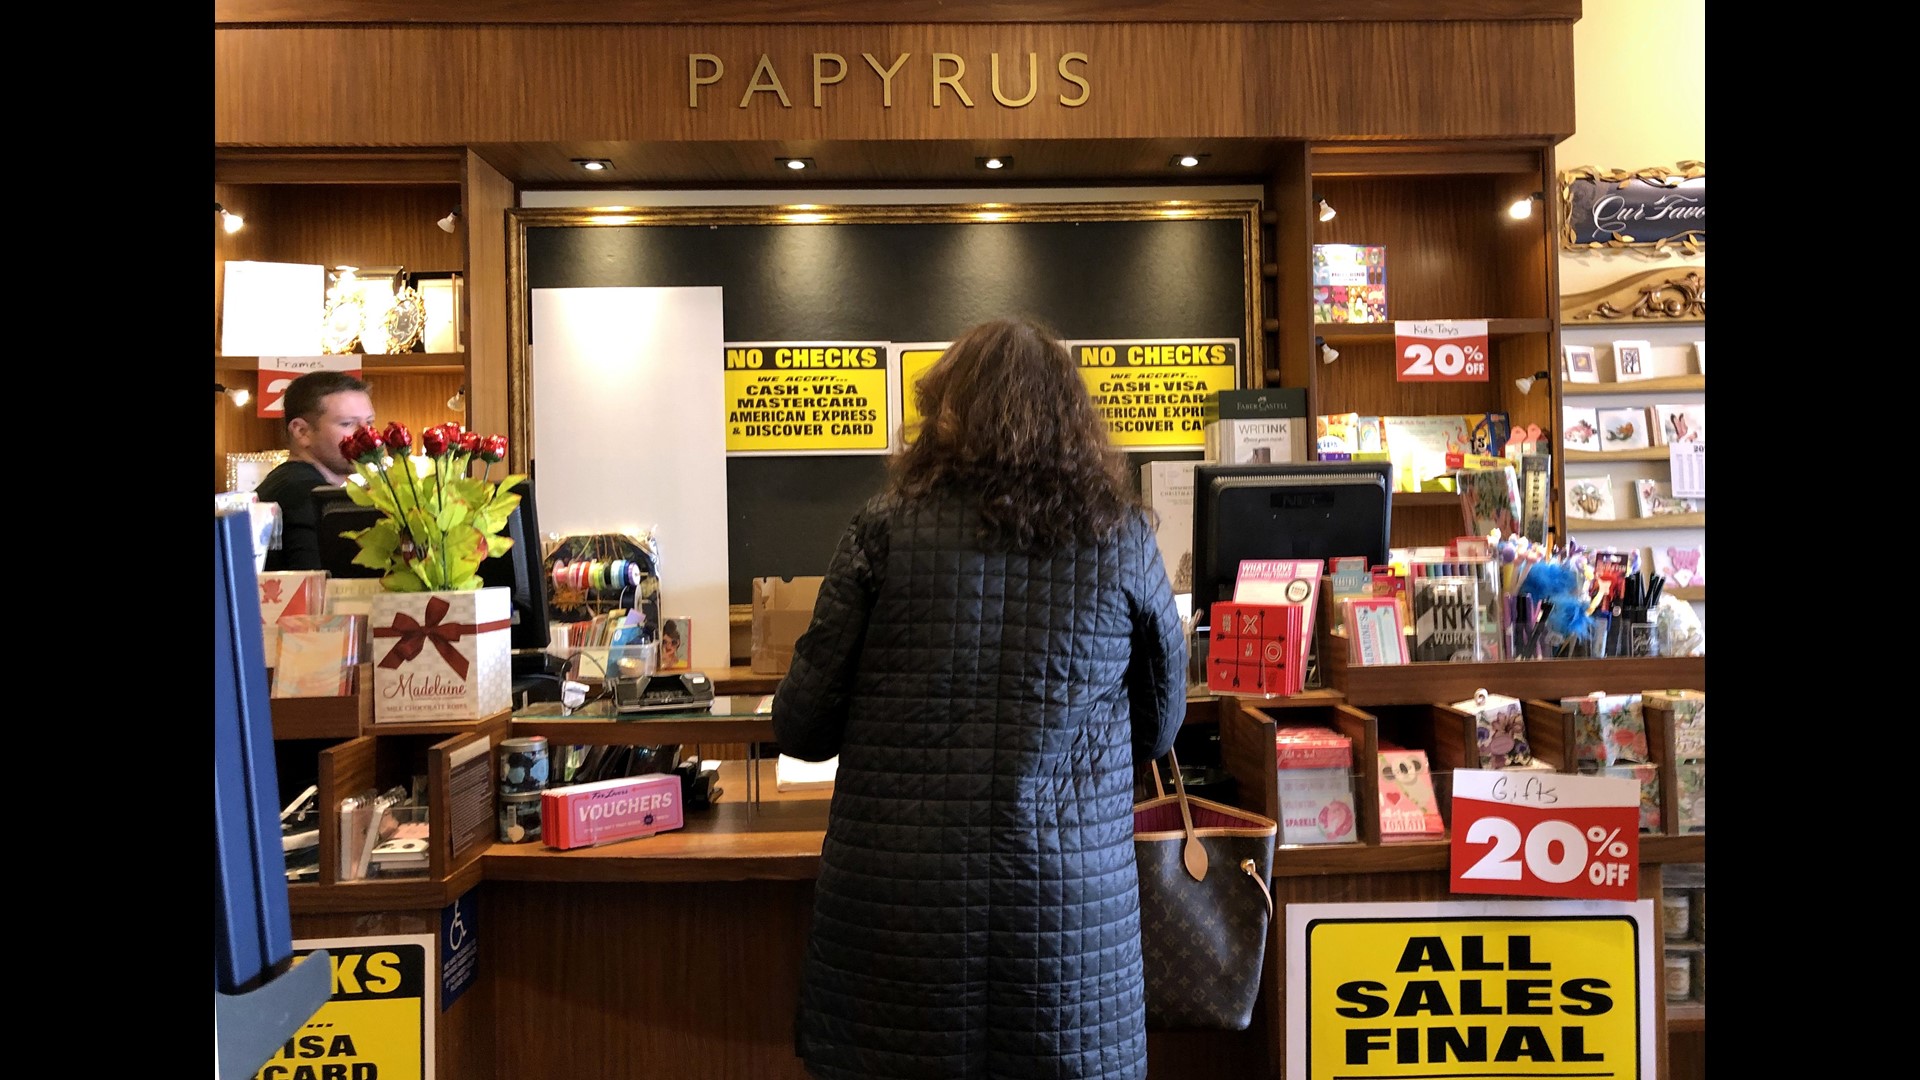 papyrus greeting card shop in washington state